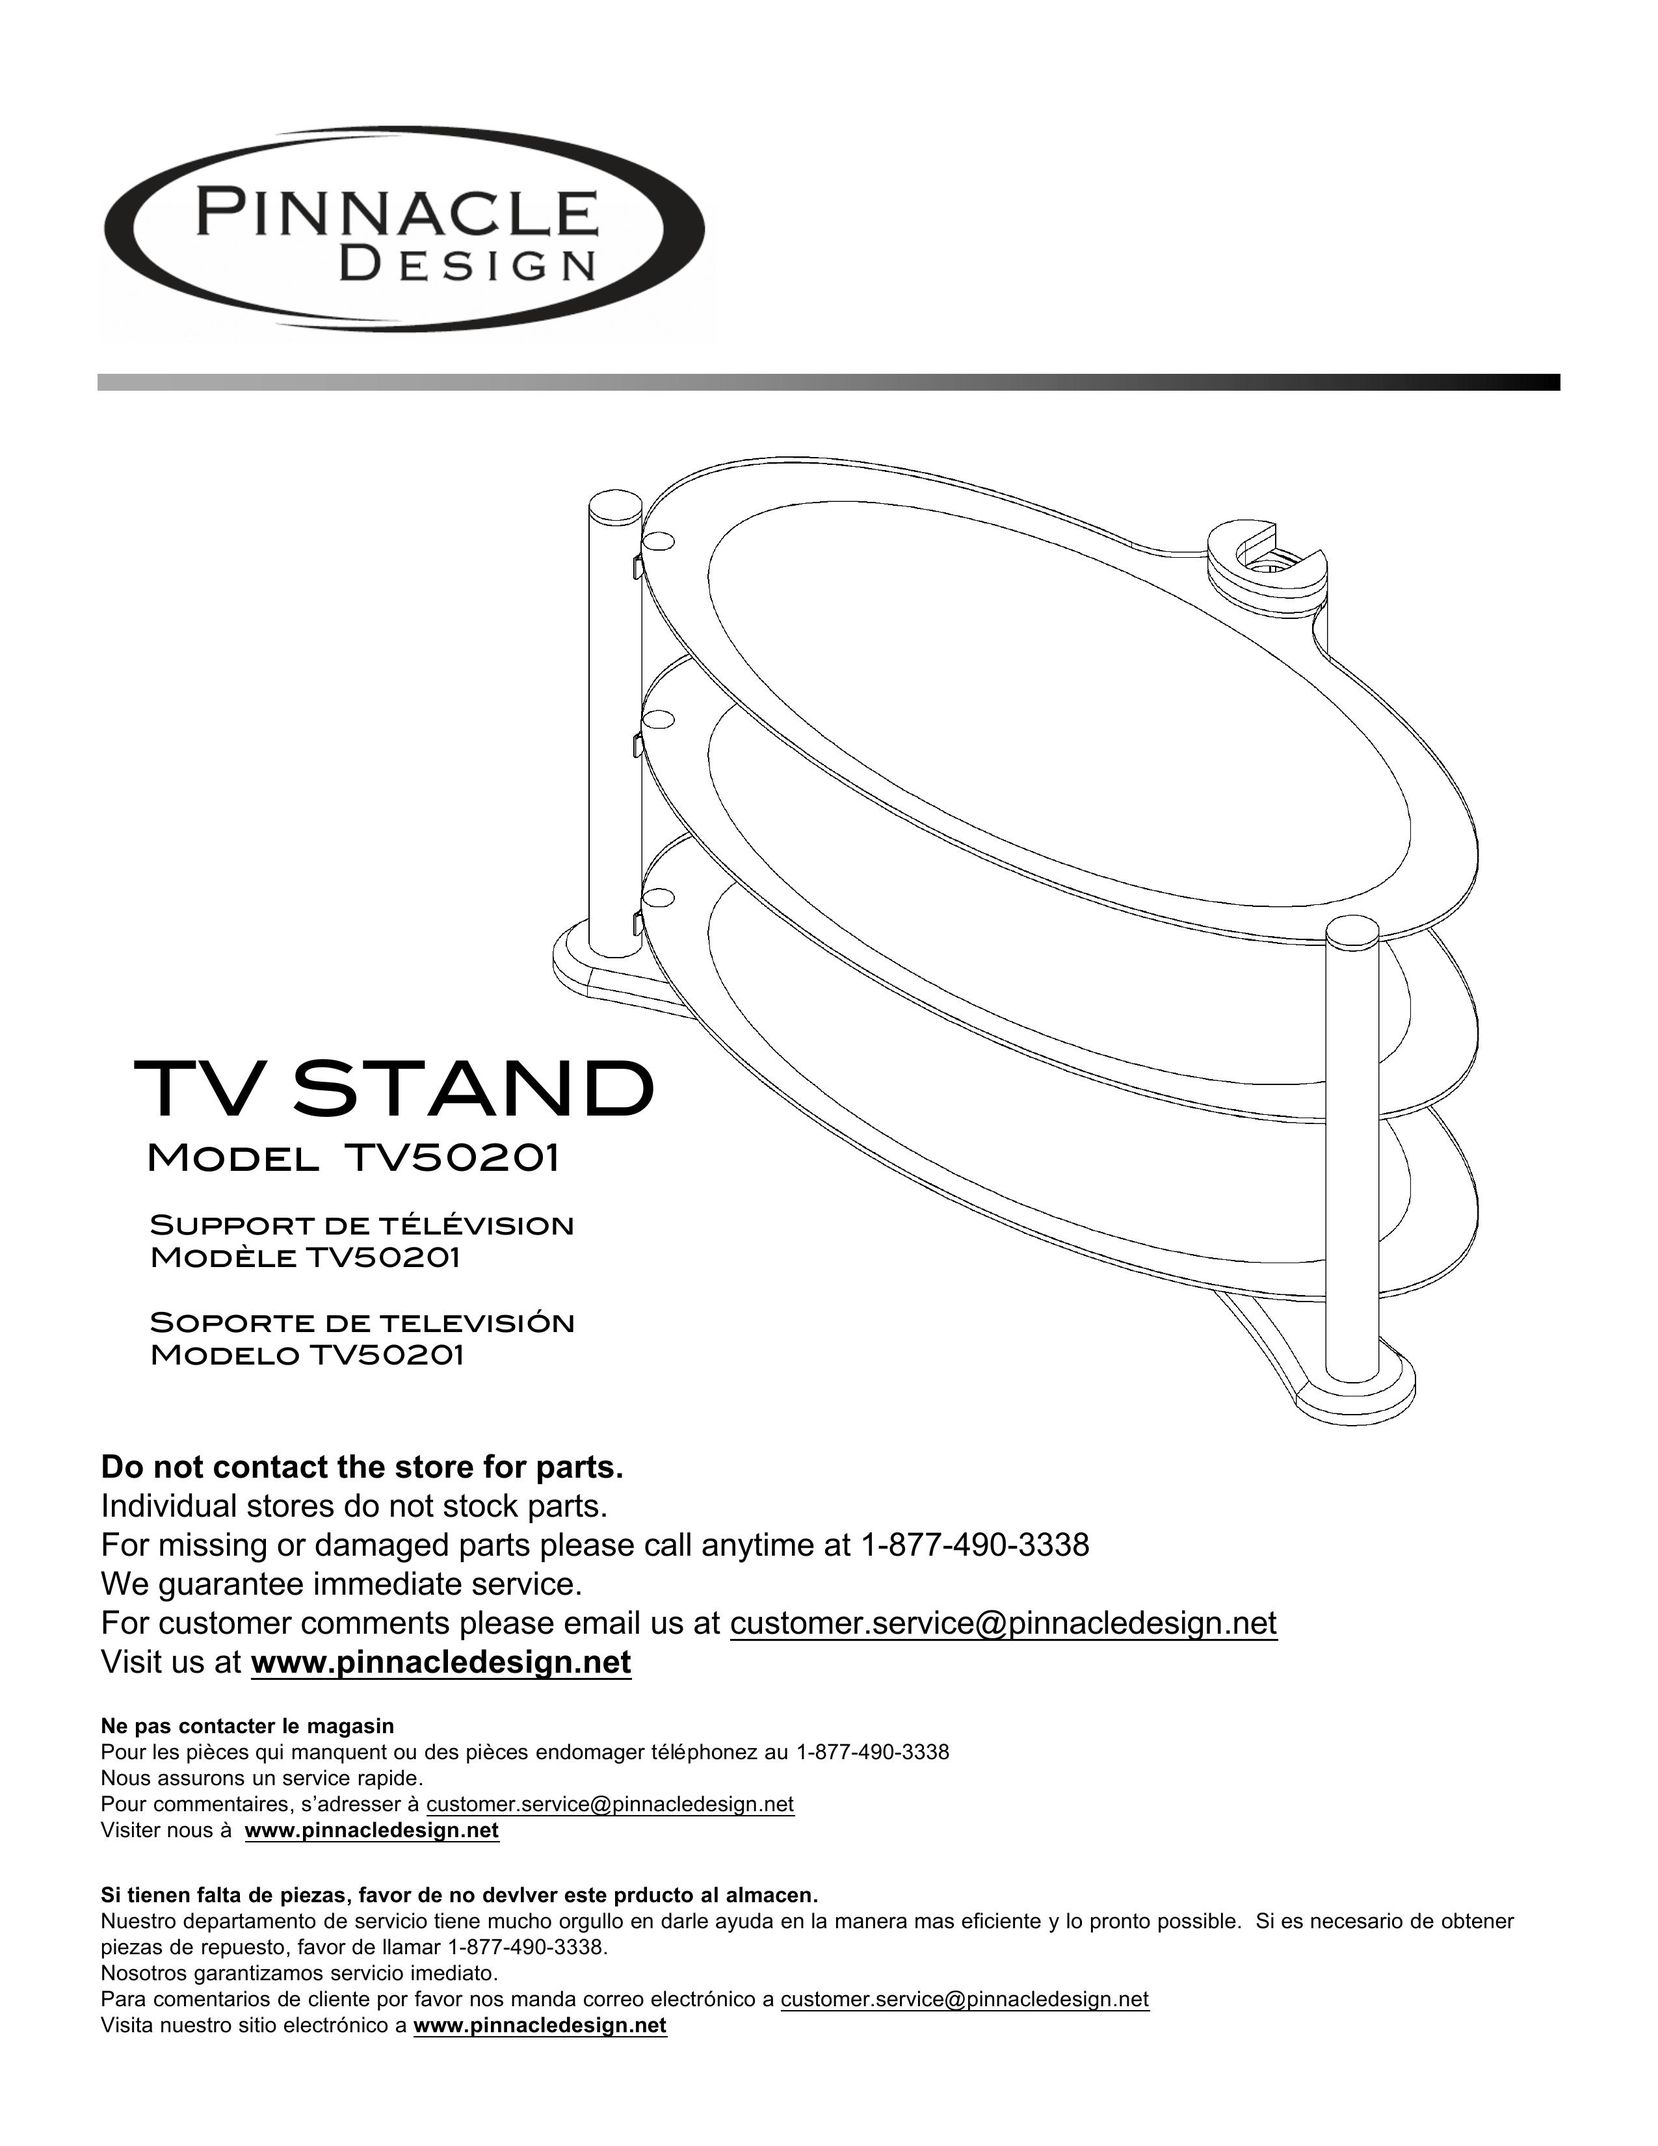 Pinnacle Design TV50201R TV Video Accessories User Manual